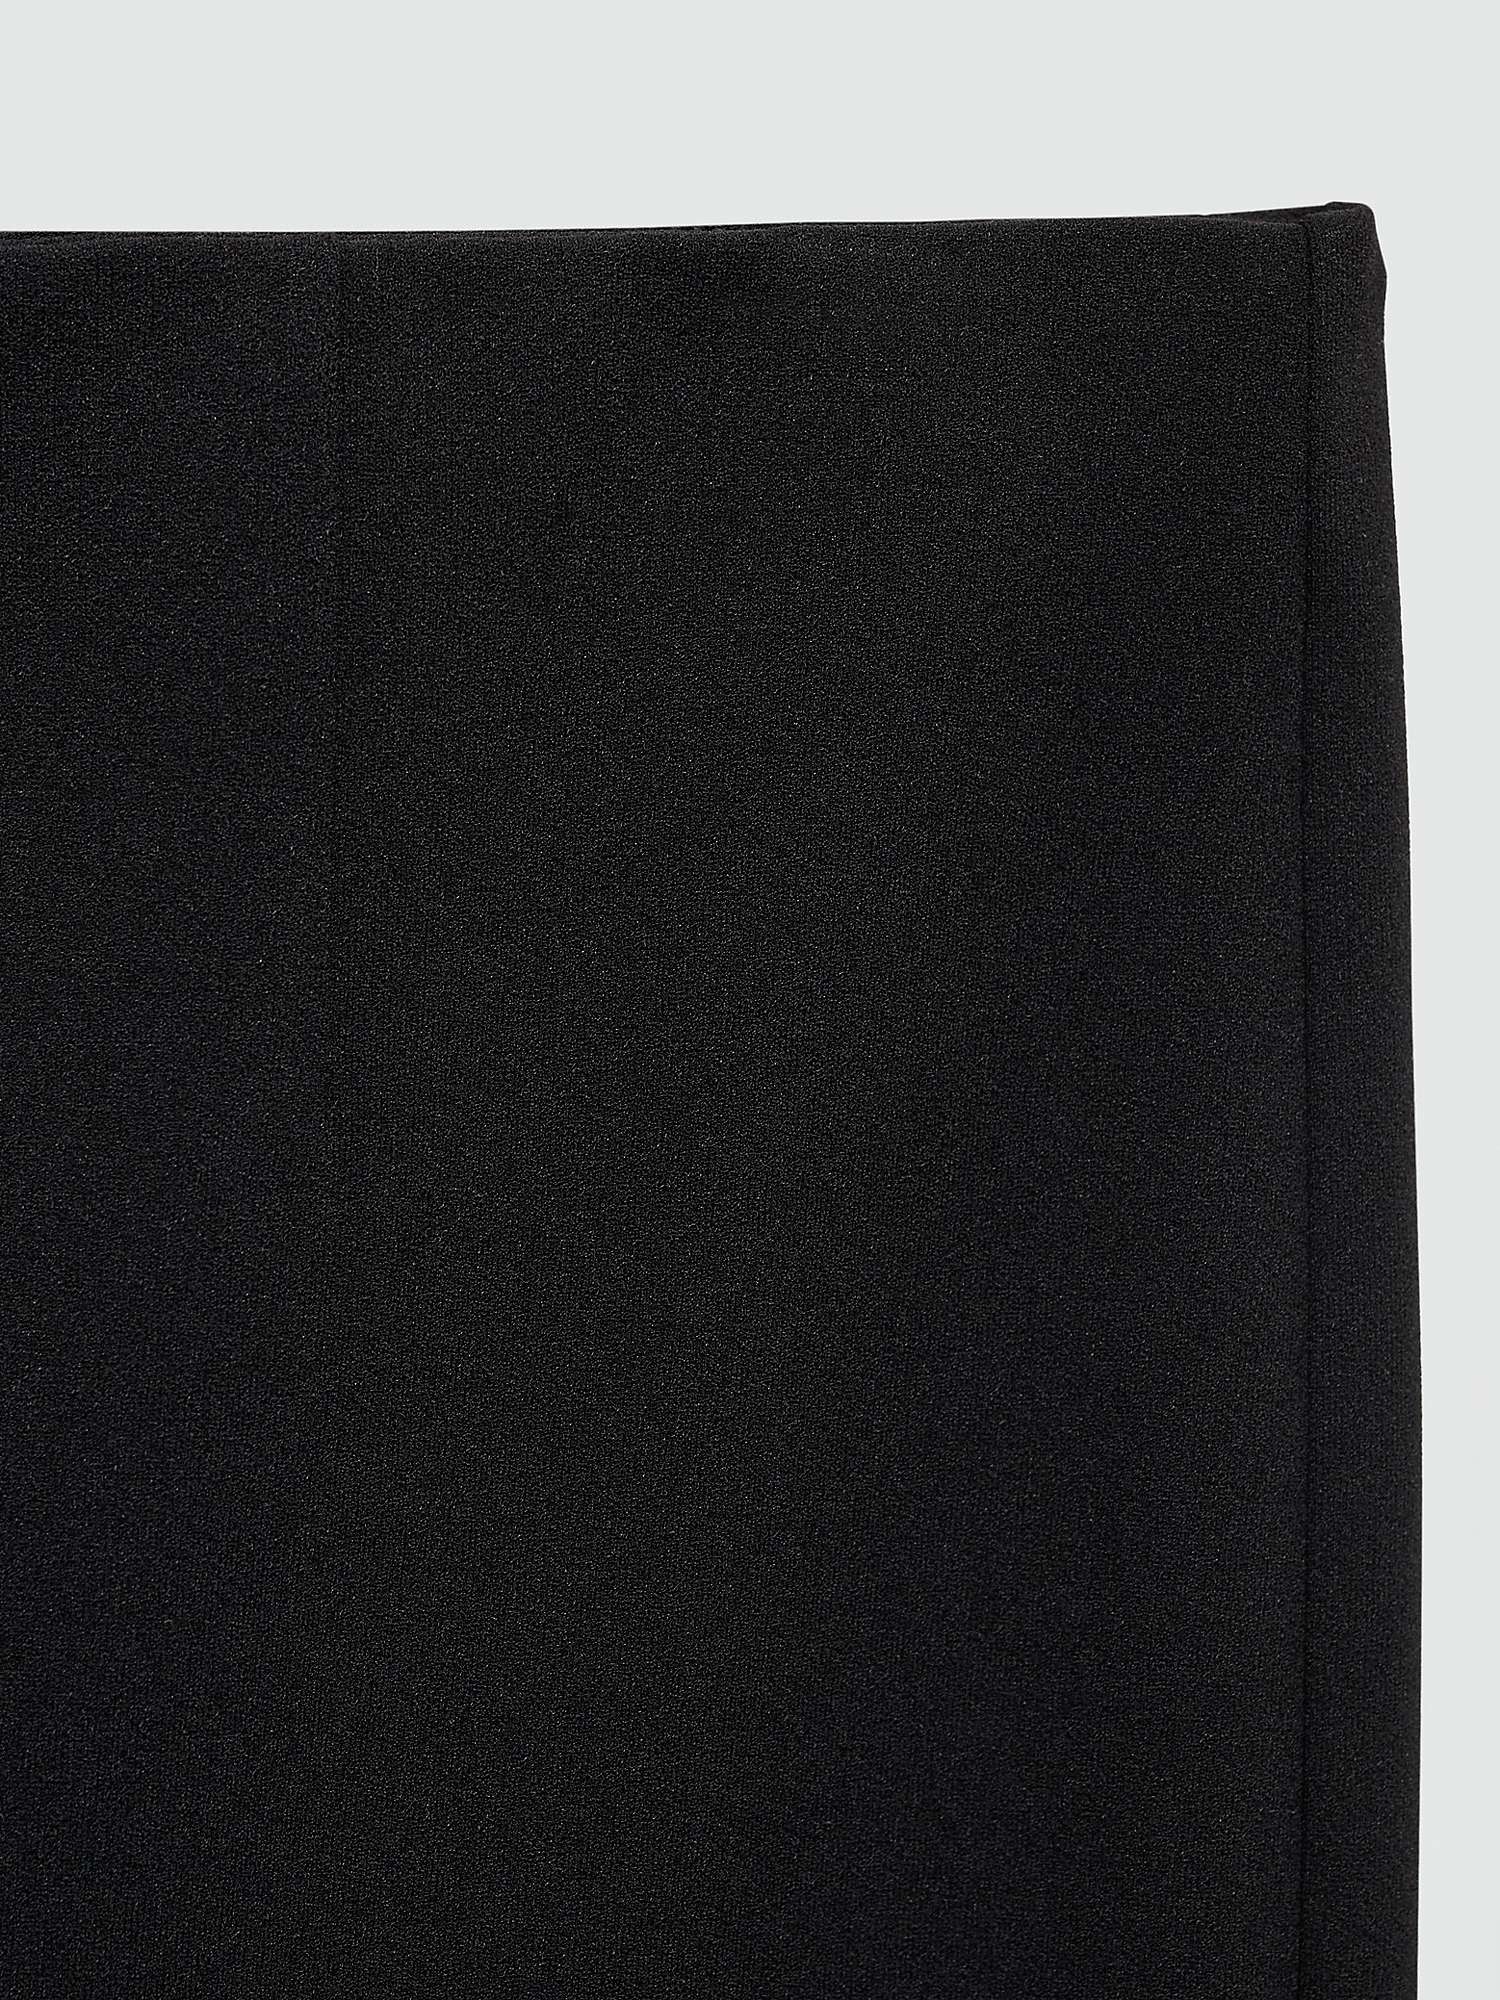 Buy Mango Avaya High Waisted Trousers, Black Online at johnlewis.com